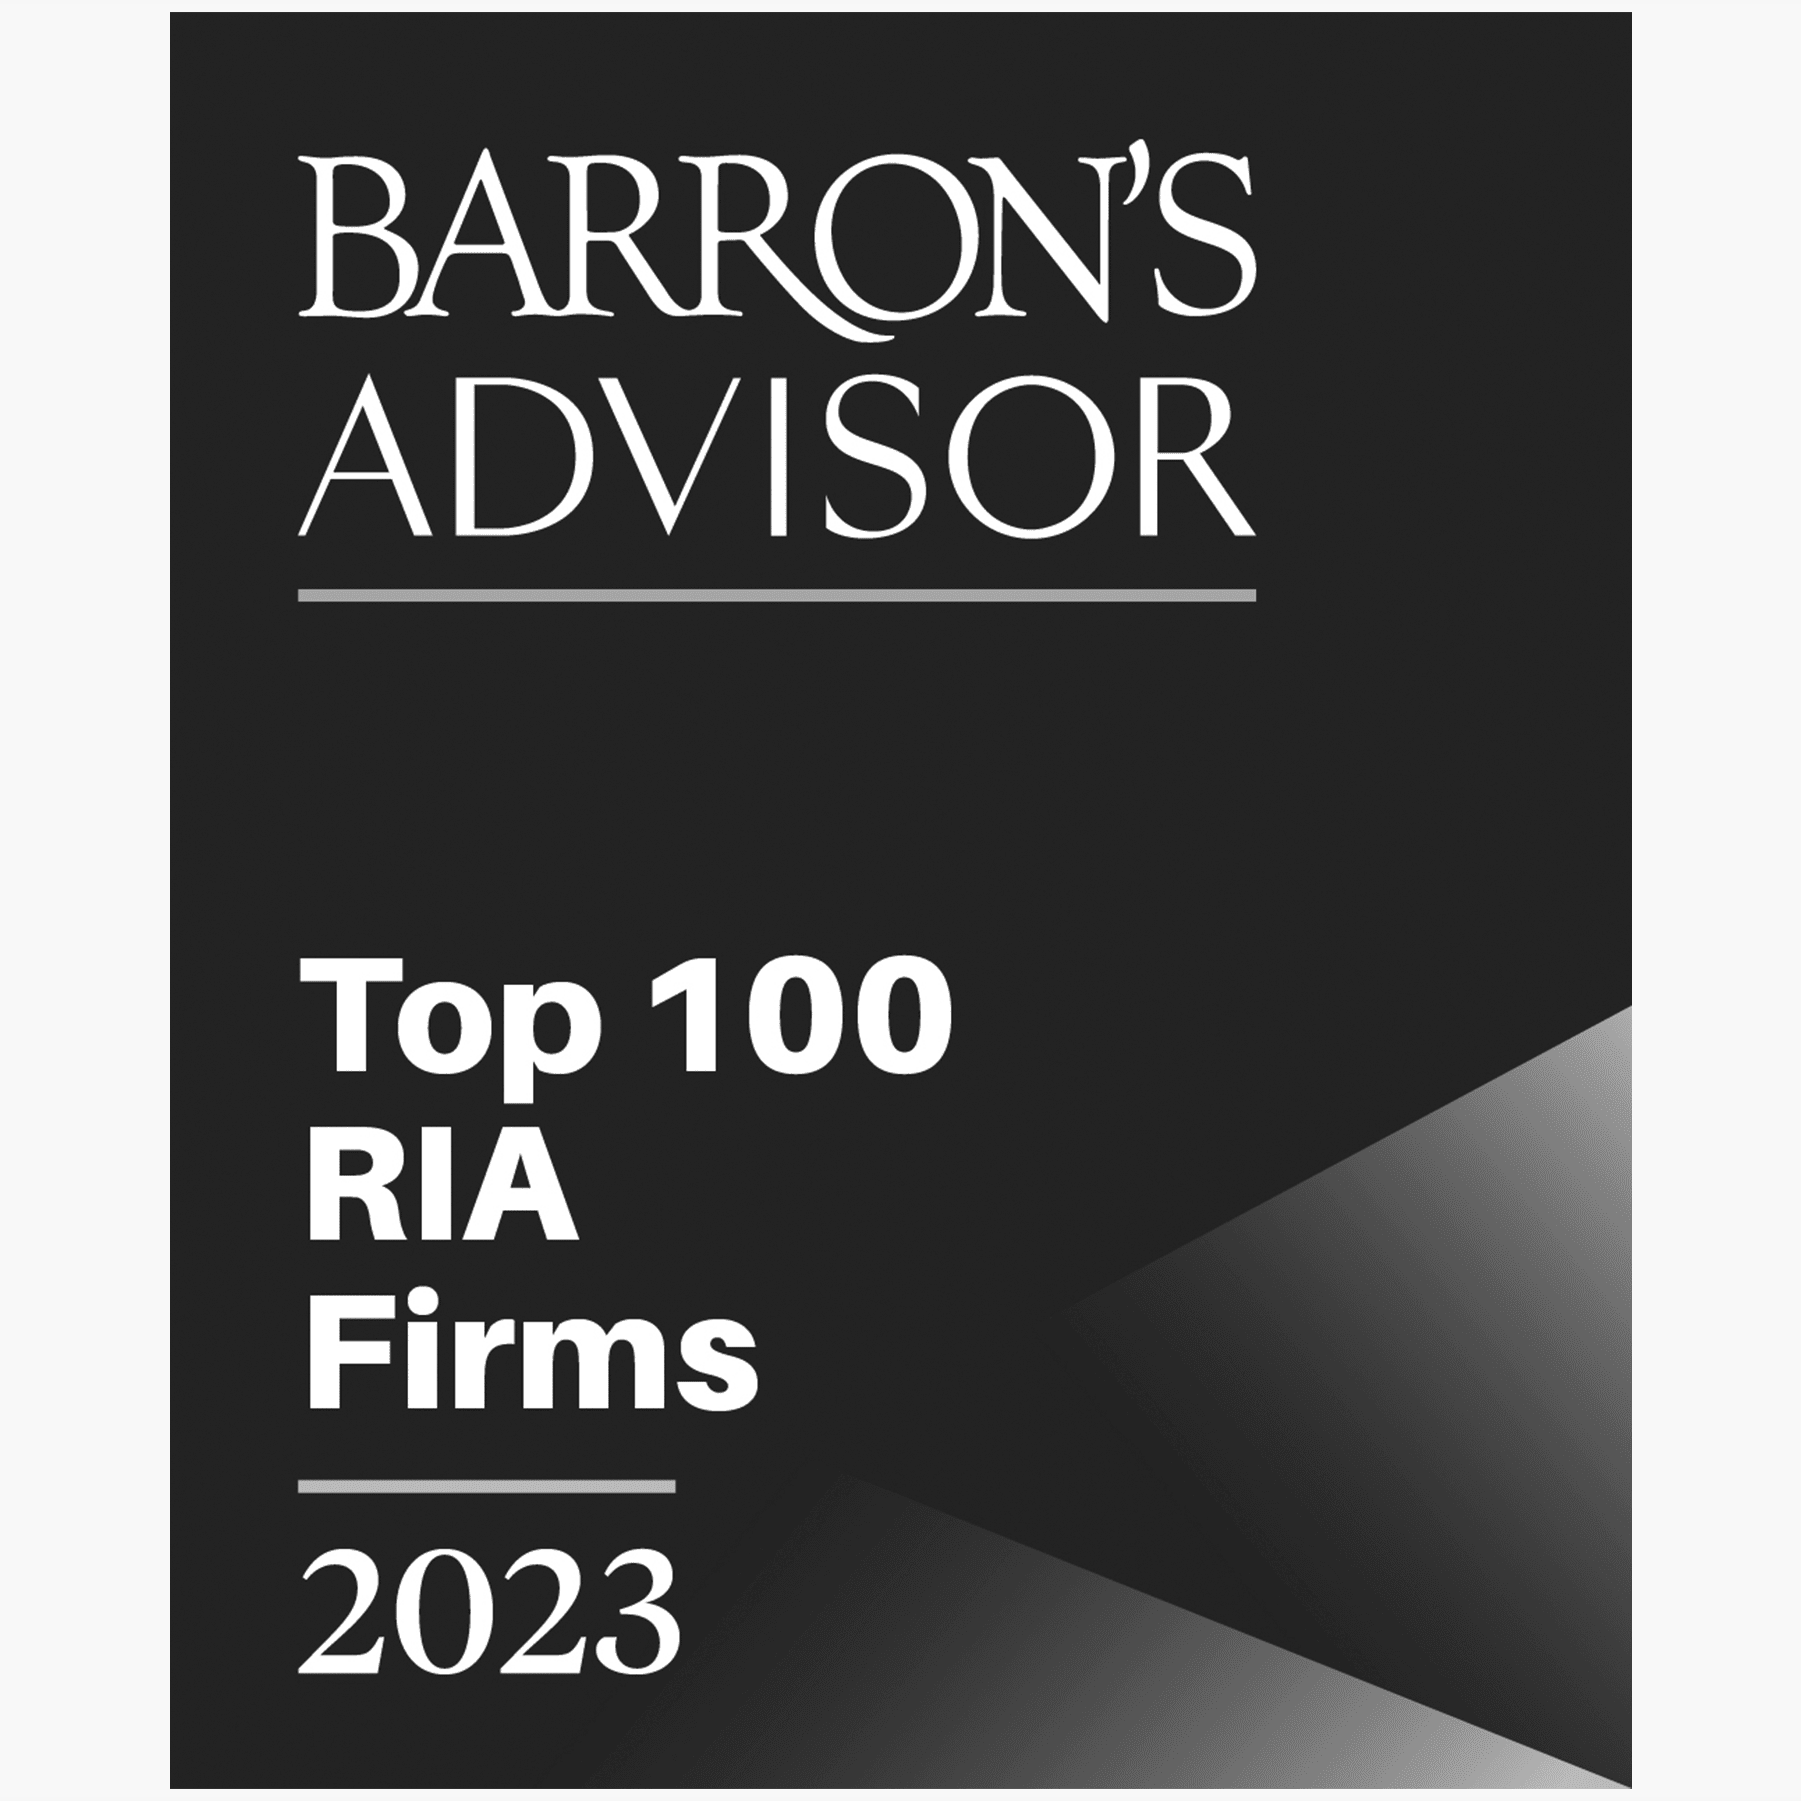 Barrons Top 100 RIA Firms 2023